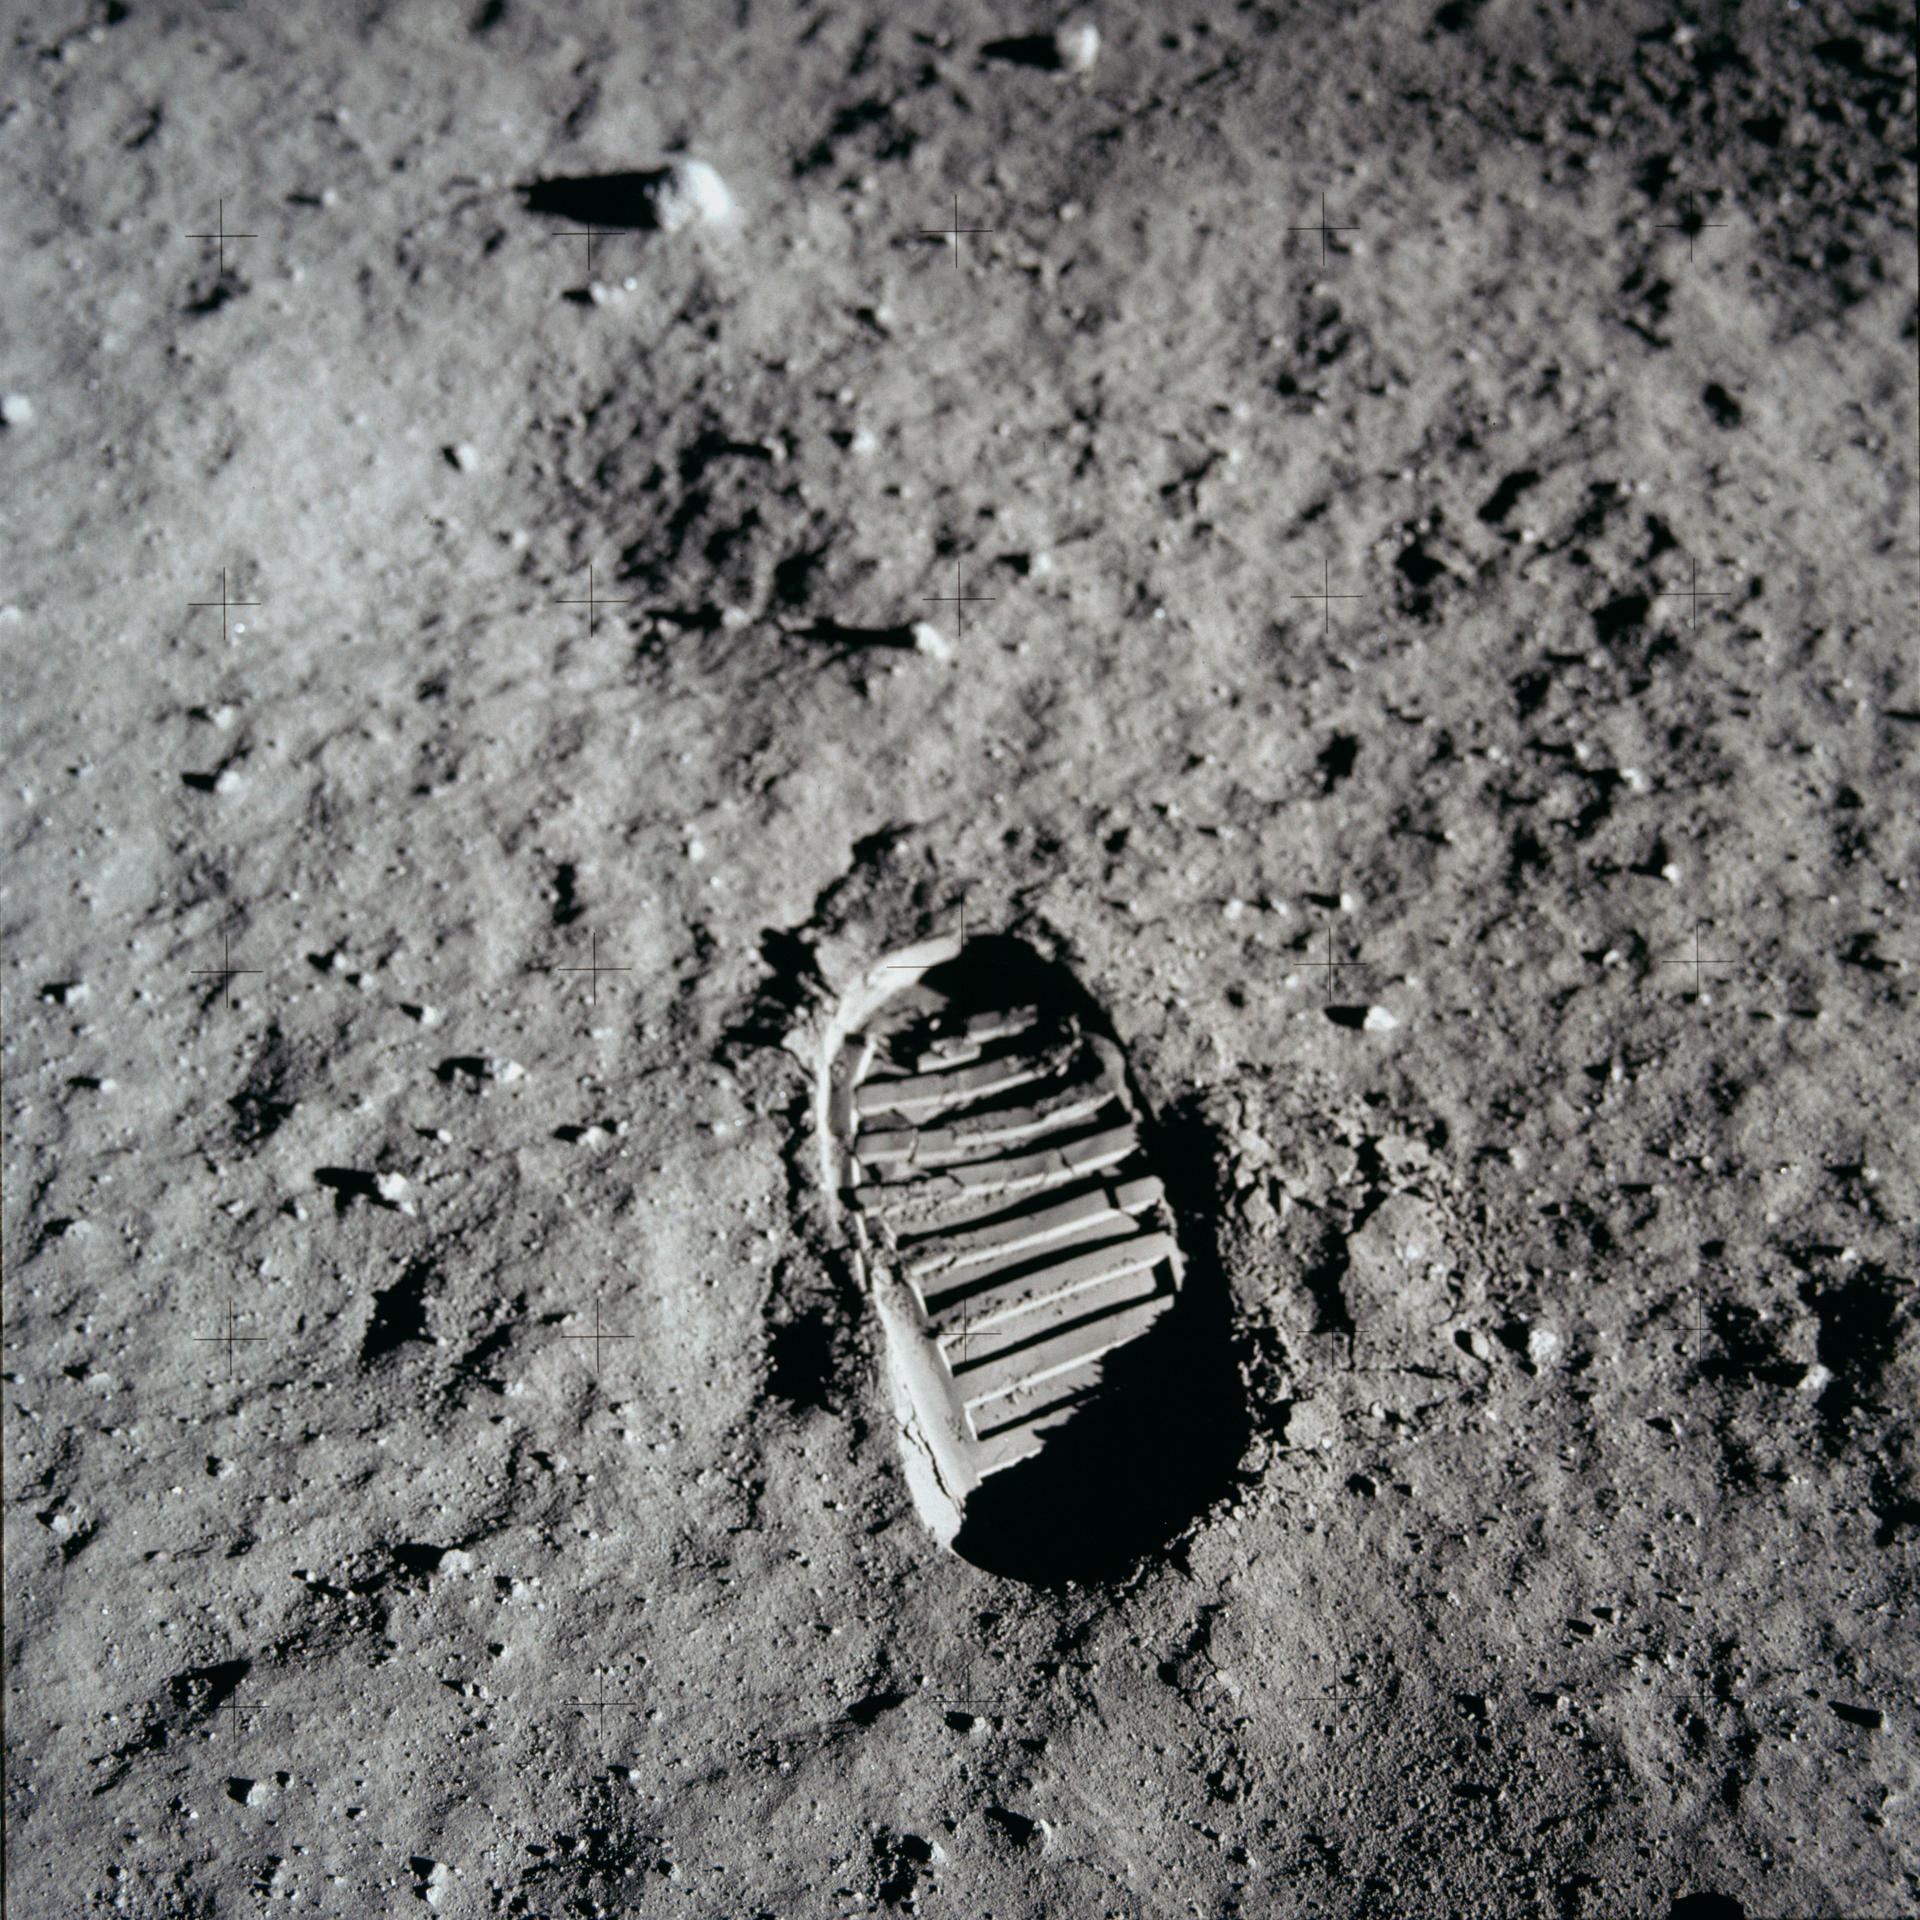 Image of Apollo astronaut boot print on the moon.